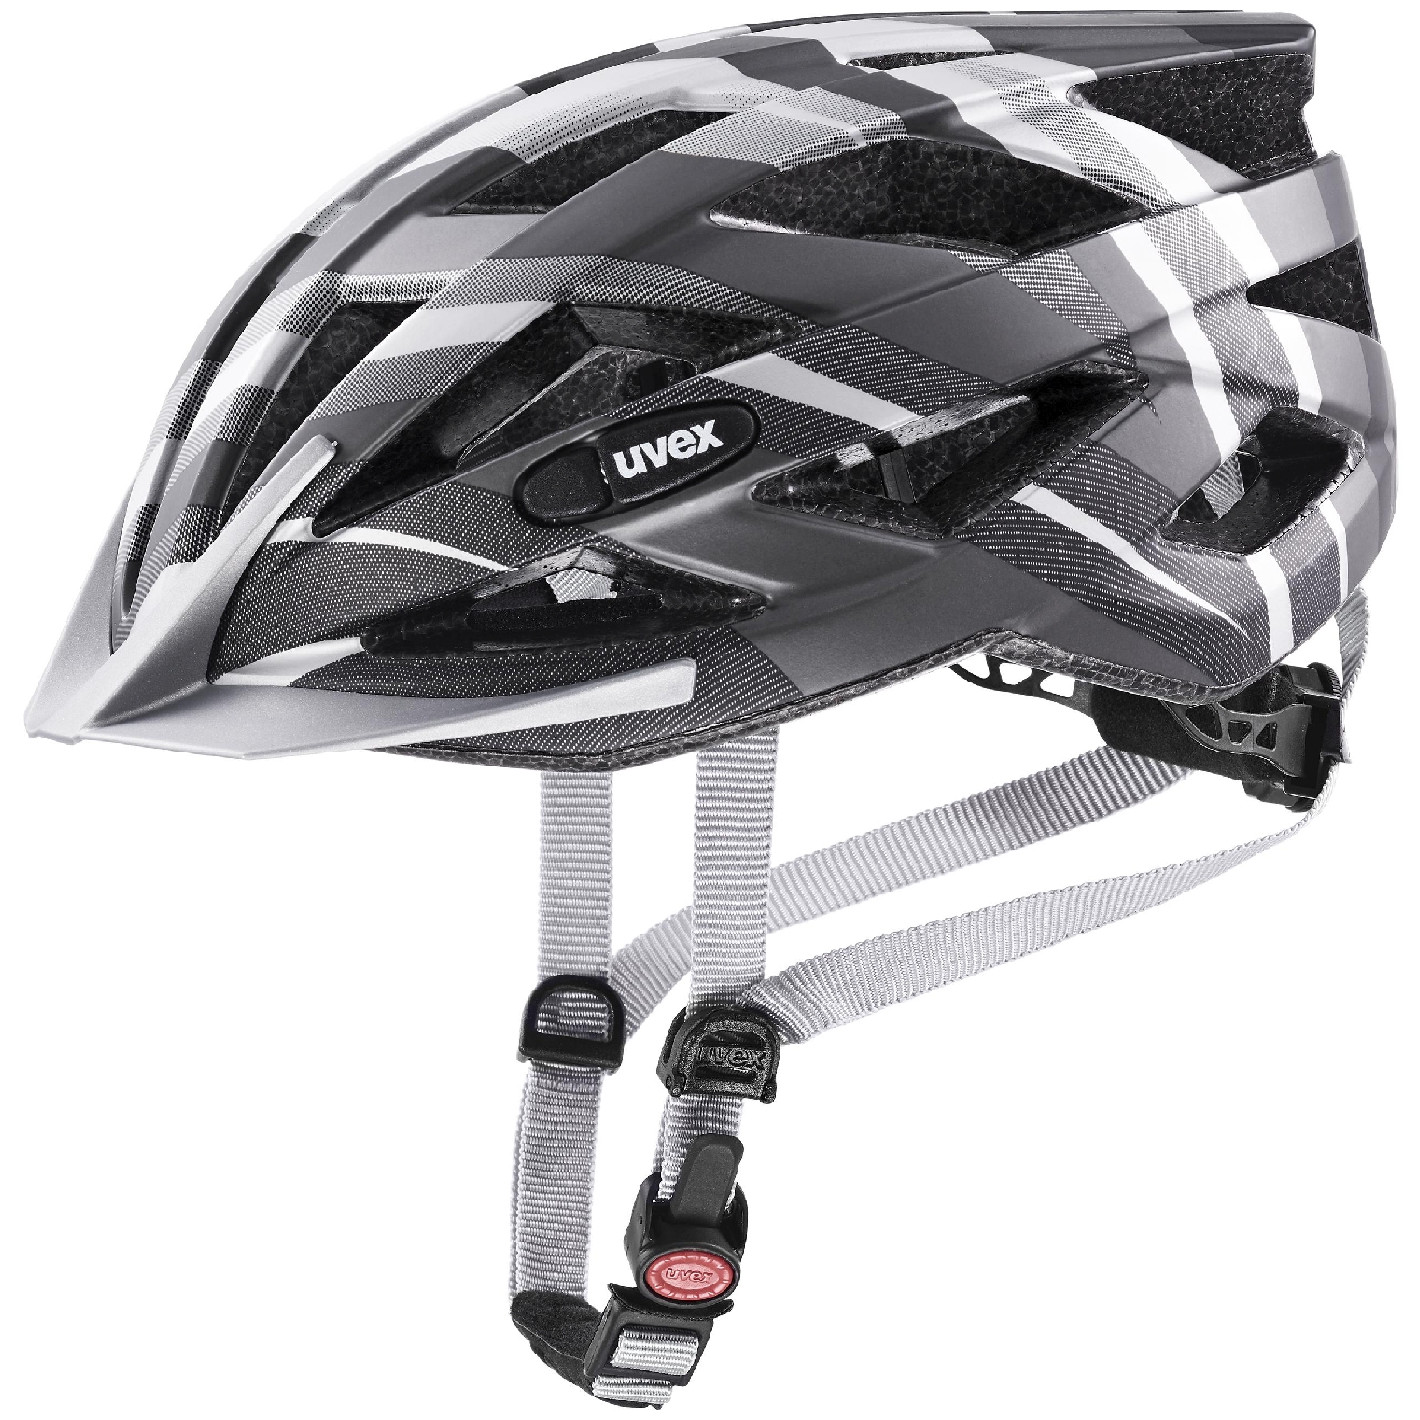 Cyklistická helma Uvex Air Wing Cc Velikost helmy: 52-57 cm / Barva: černá/stříbrná